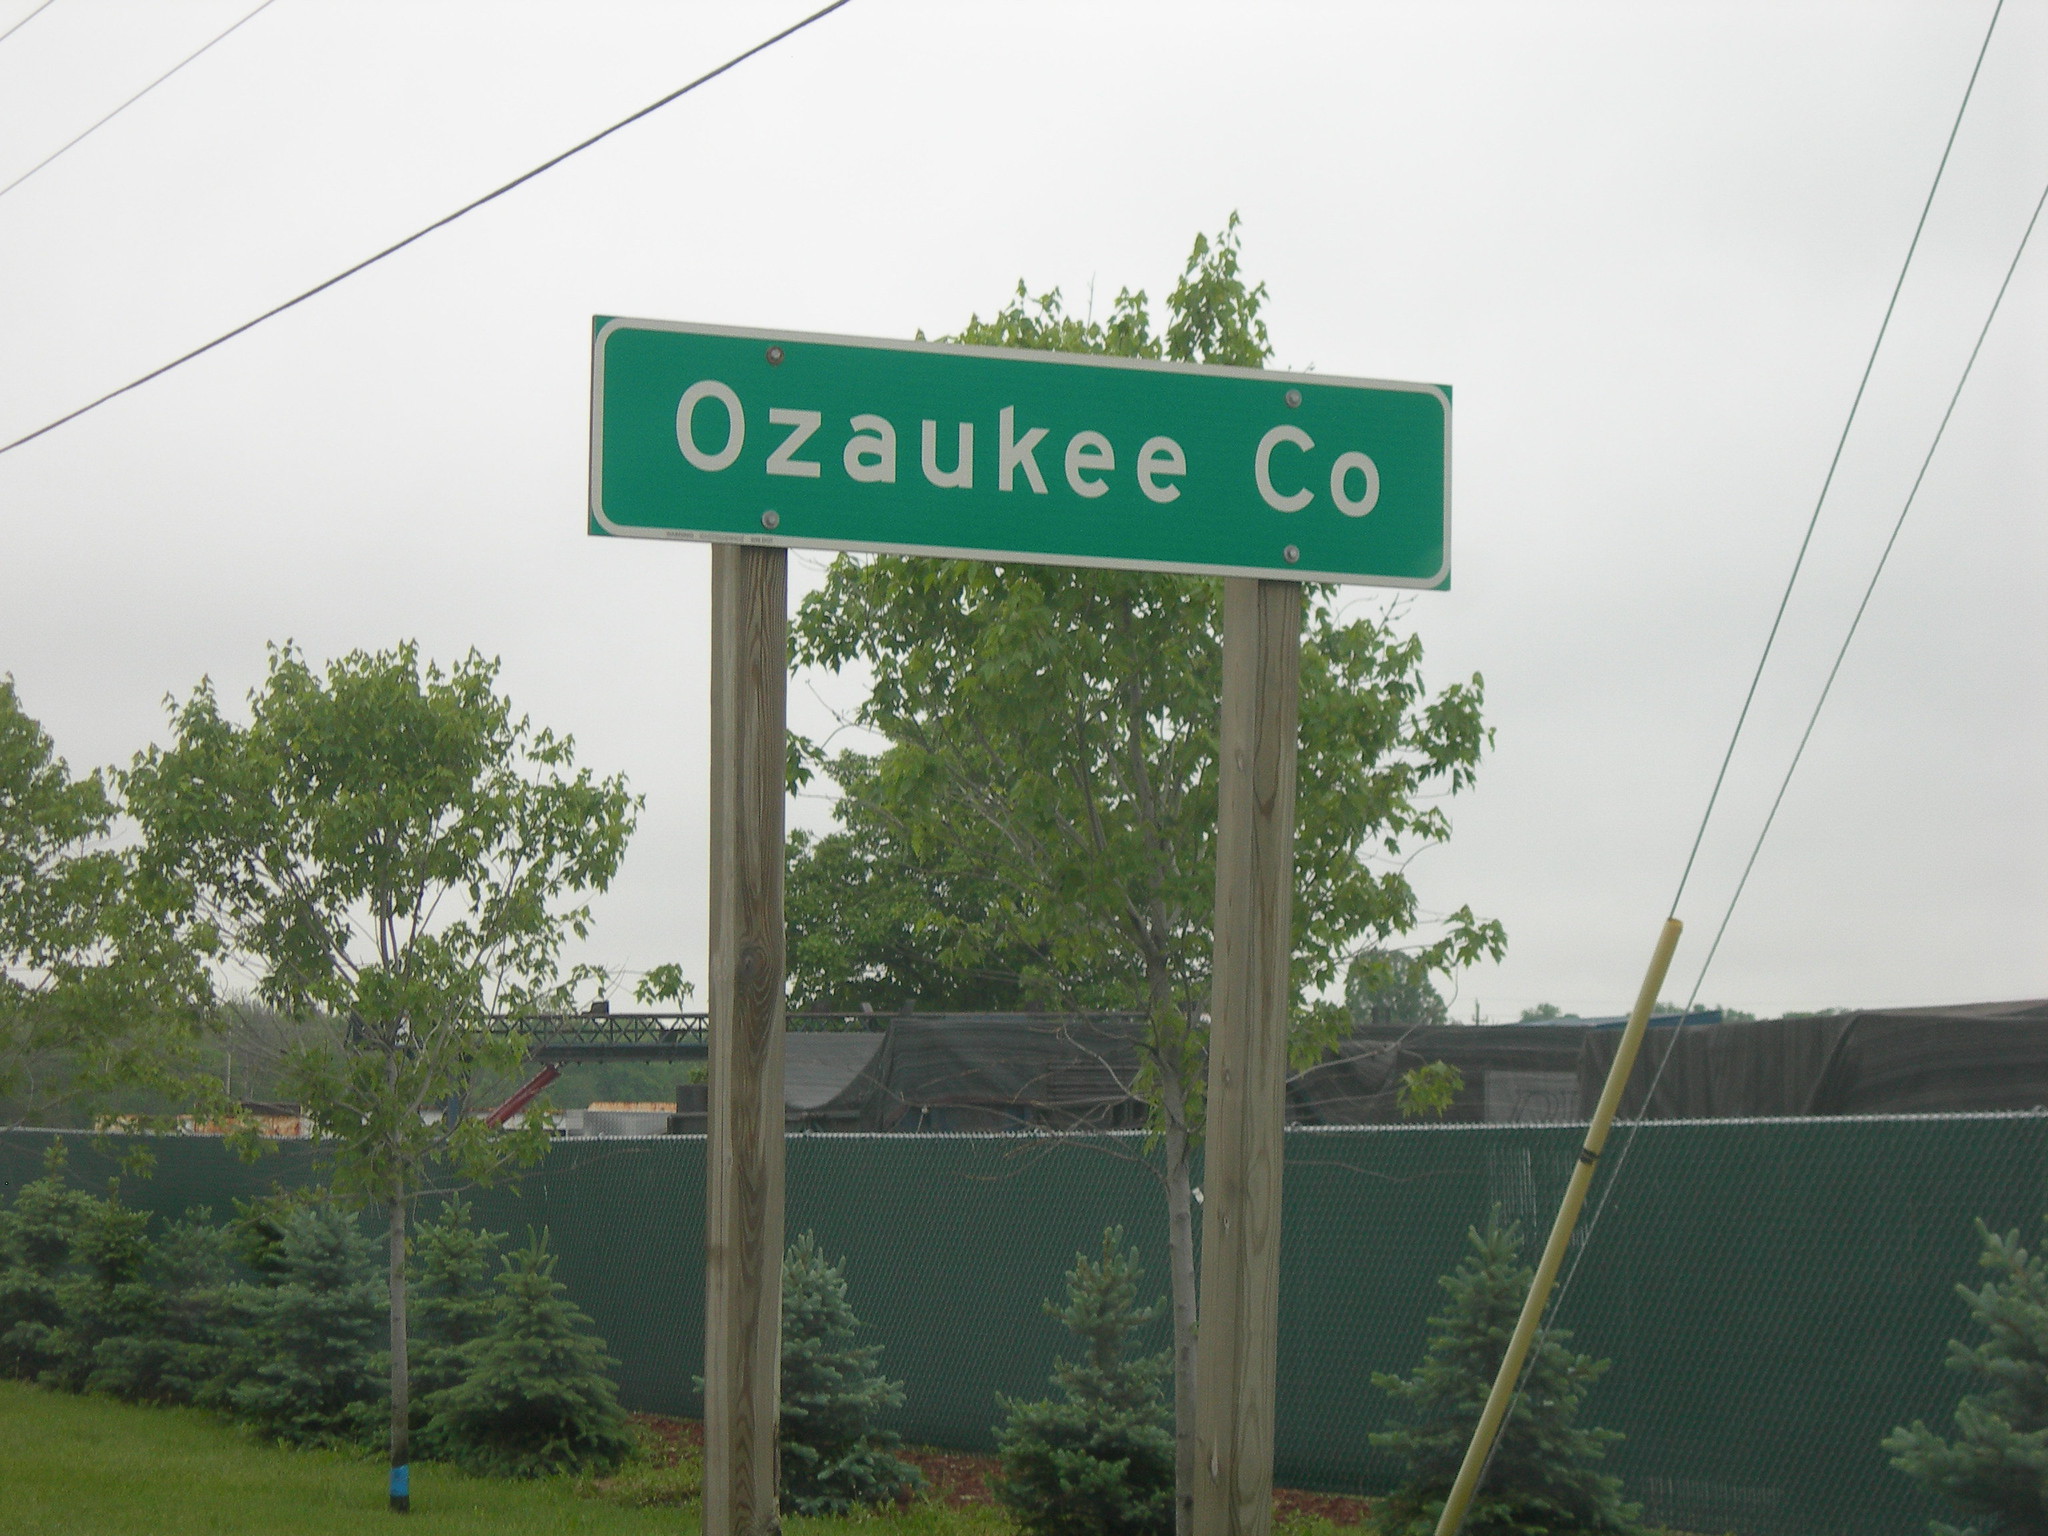 Green road sign for Ozaukee Co.